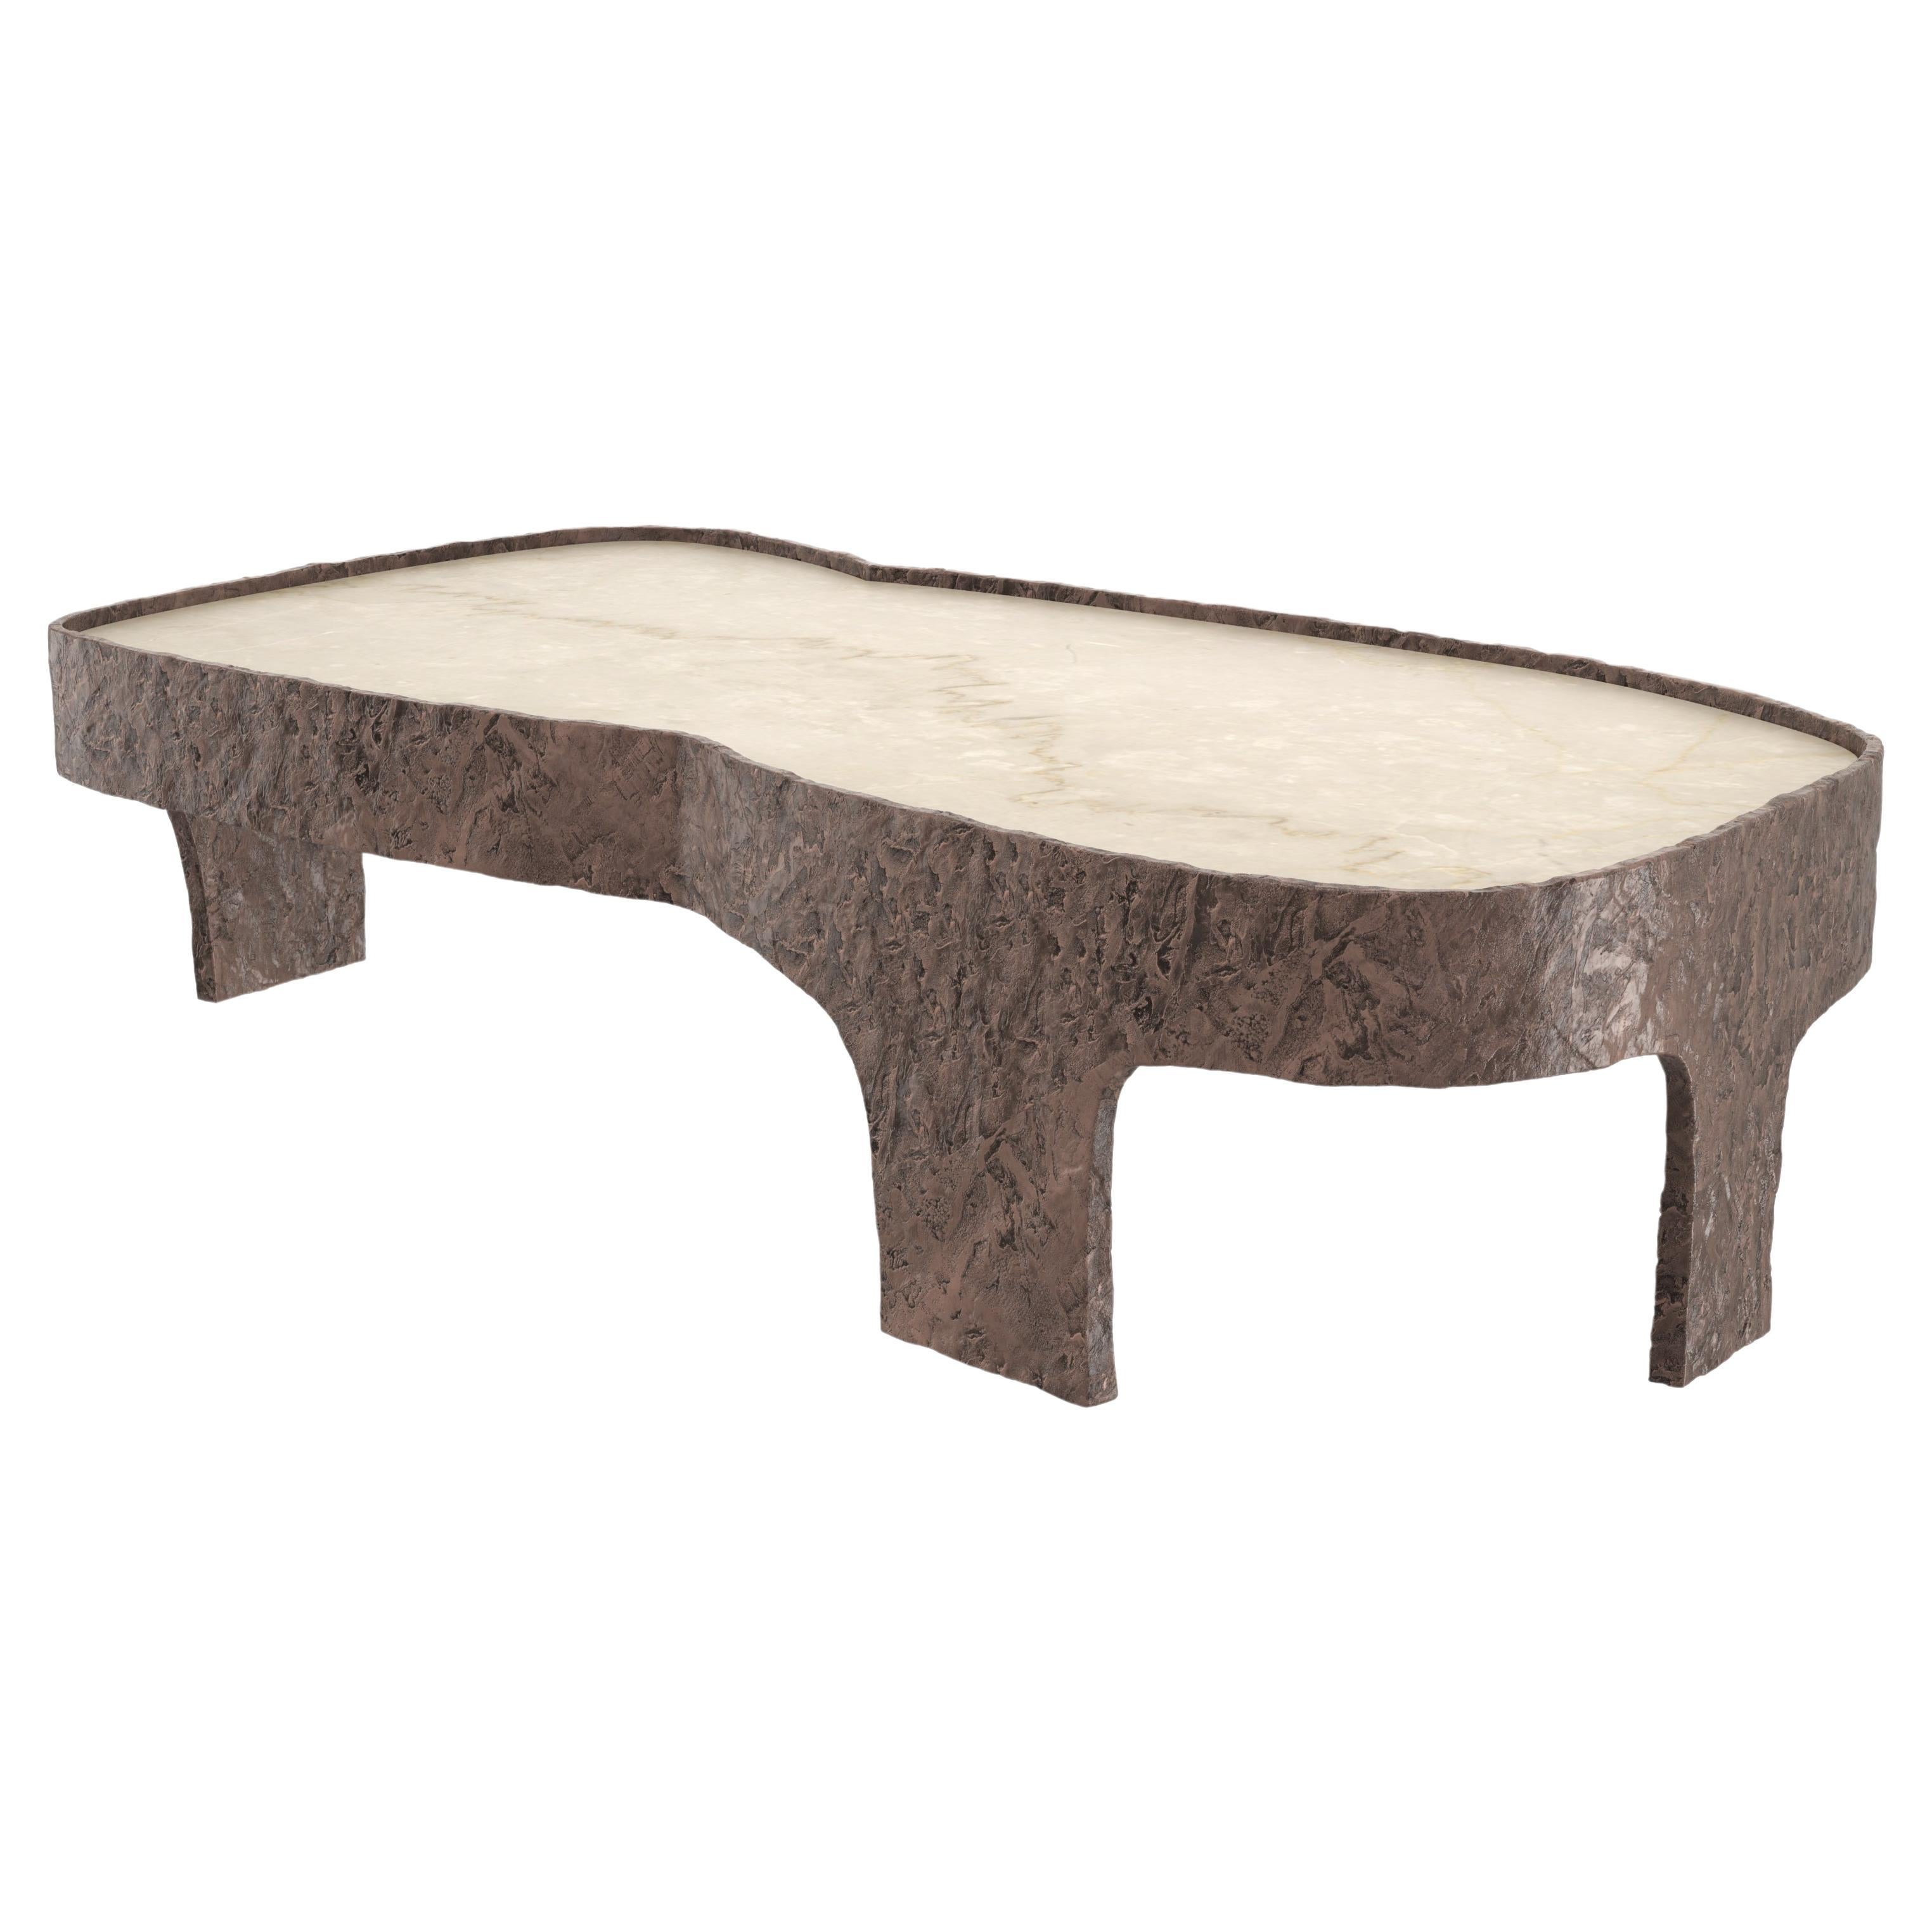 Limited Edition Marble Bronze Table, Sumatra V3 by Edizione Limitata For Sale